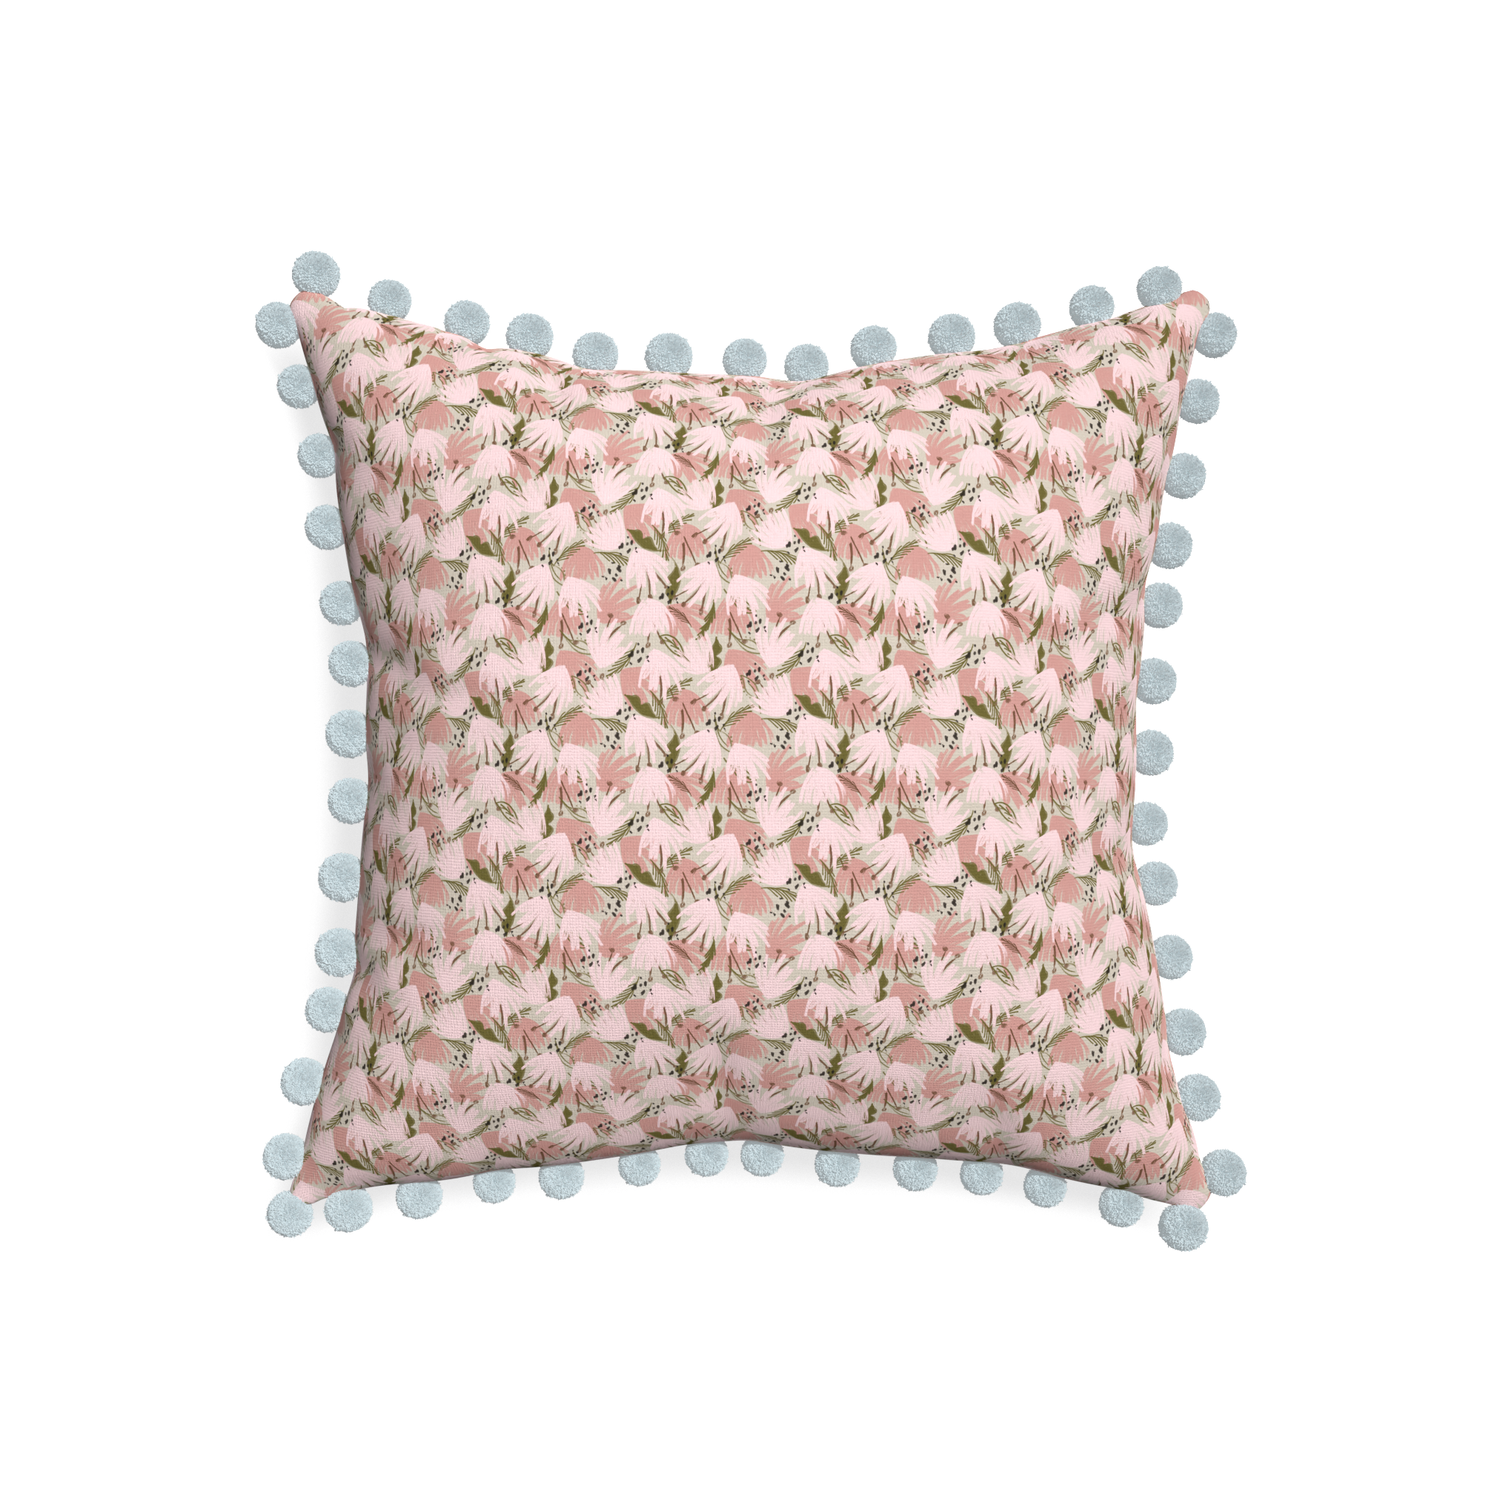 20-square eden pink custom pillow with powder pom pom on white background